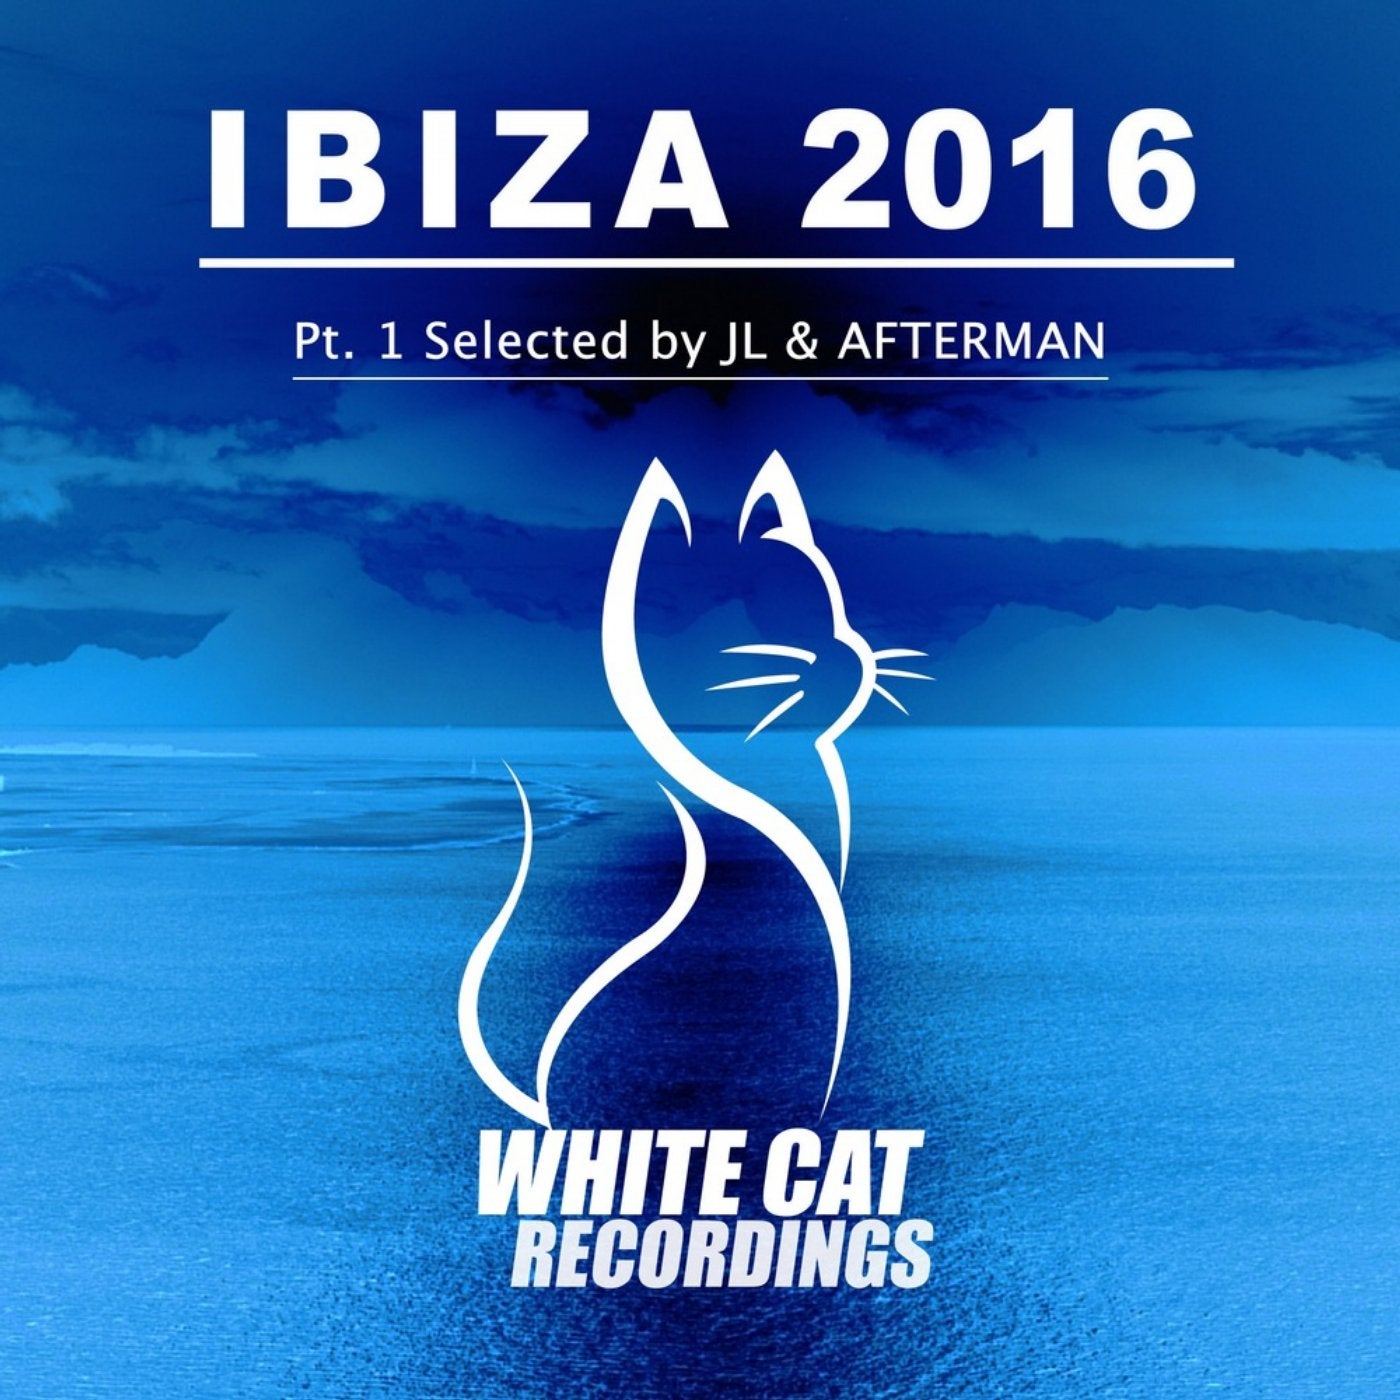 Ibiza 2016 Pt.1 Selected by Jl & Afterman (feat. Ibiza 2016 Pt.1 Selected By Jl, Afterman)